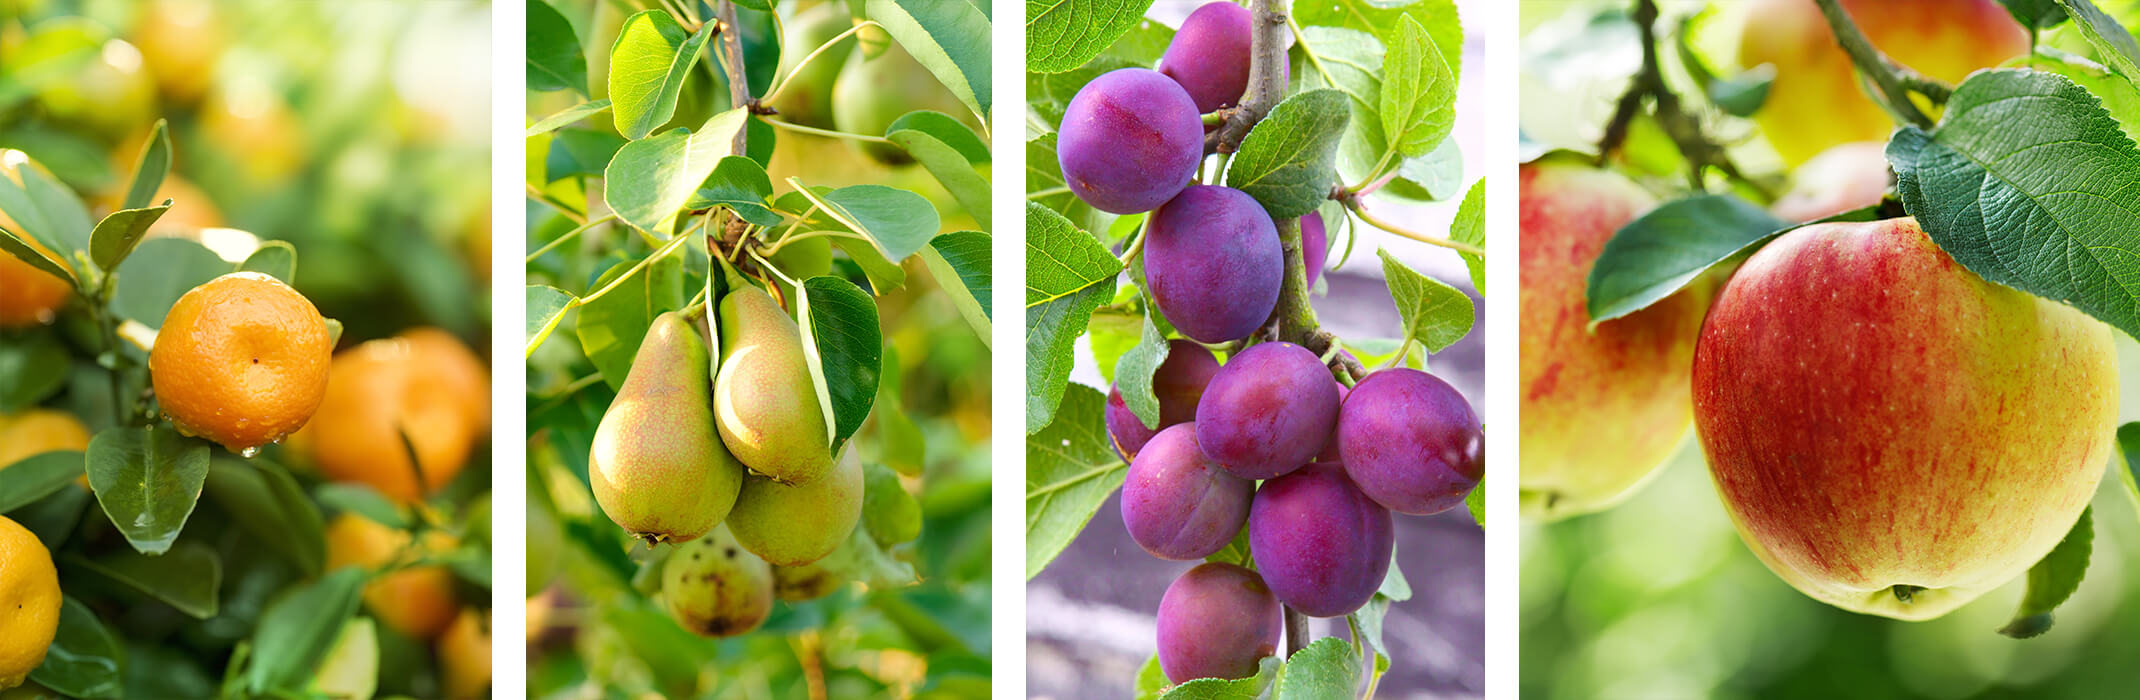 Organic fruit tree nursery arizona